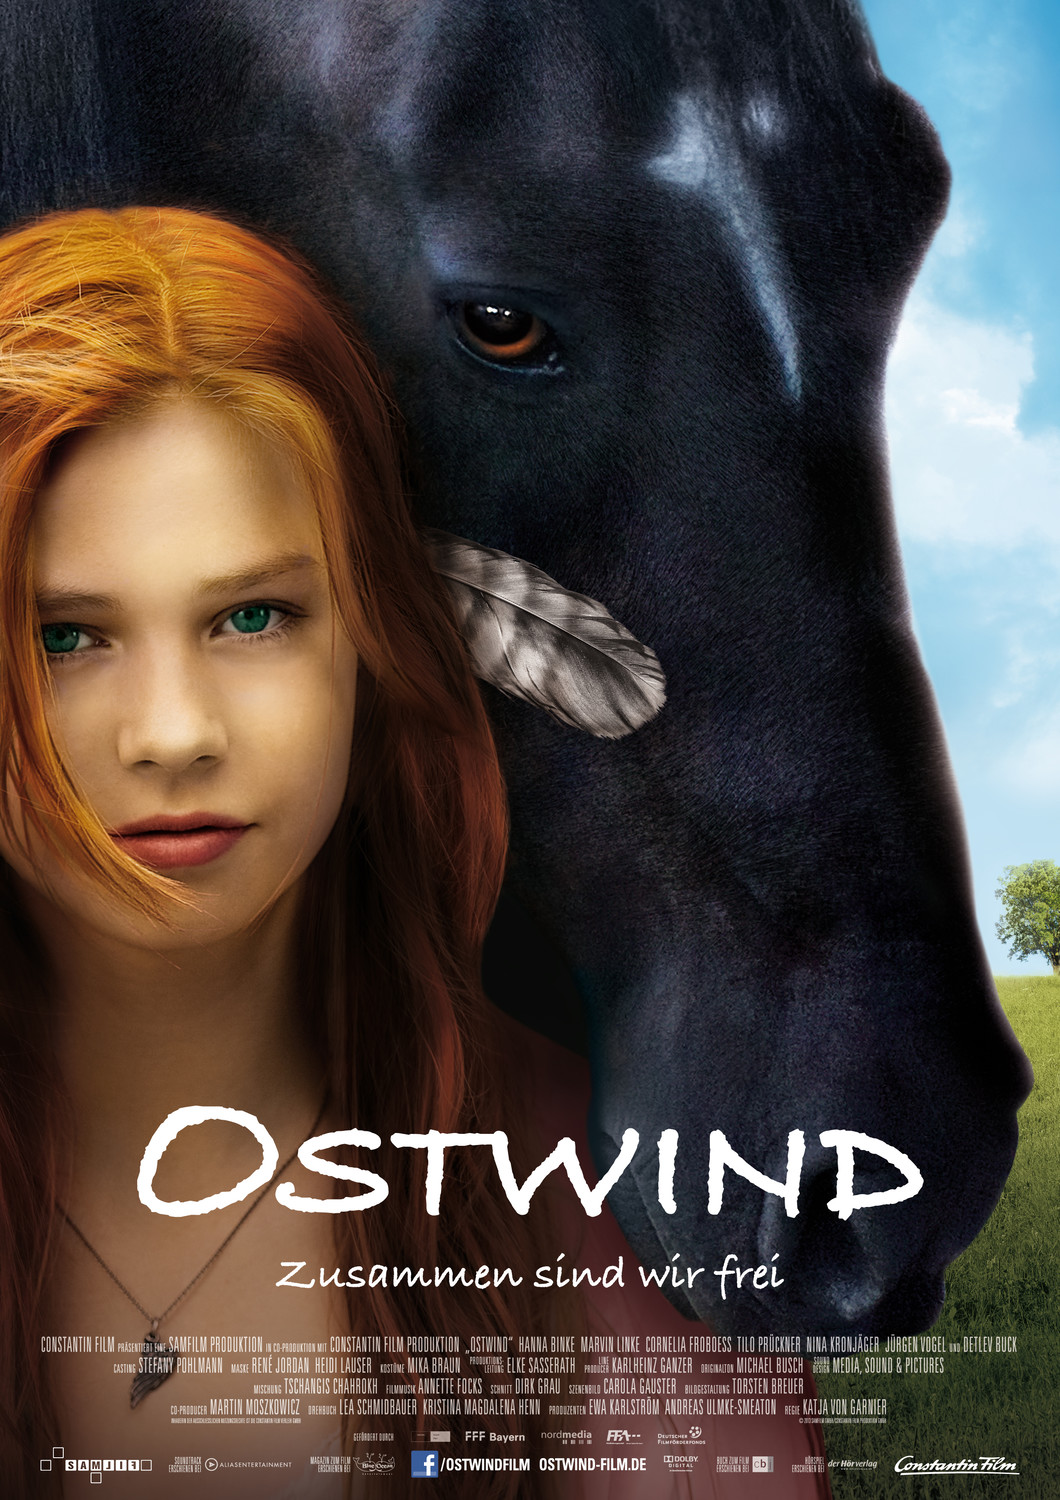 Windstorm Aka Ostwind (2013)